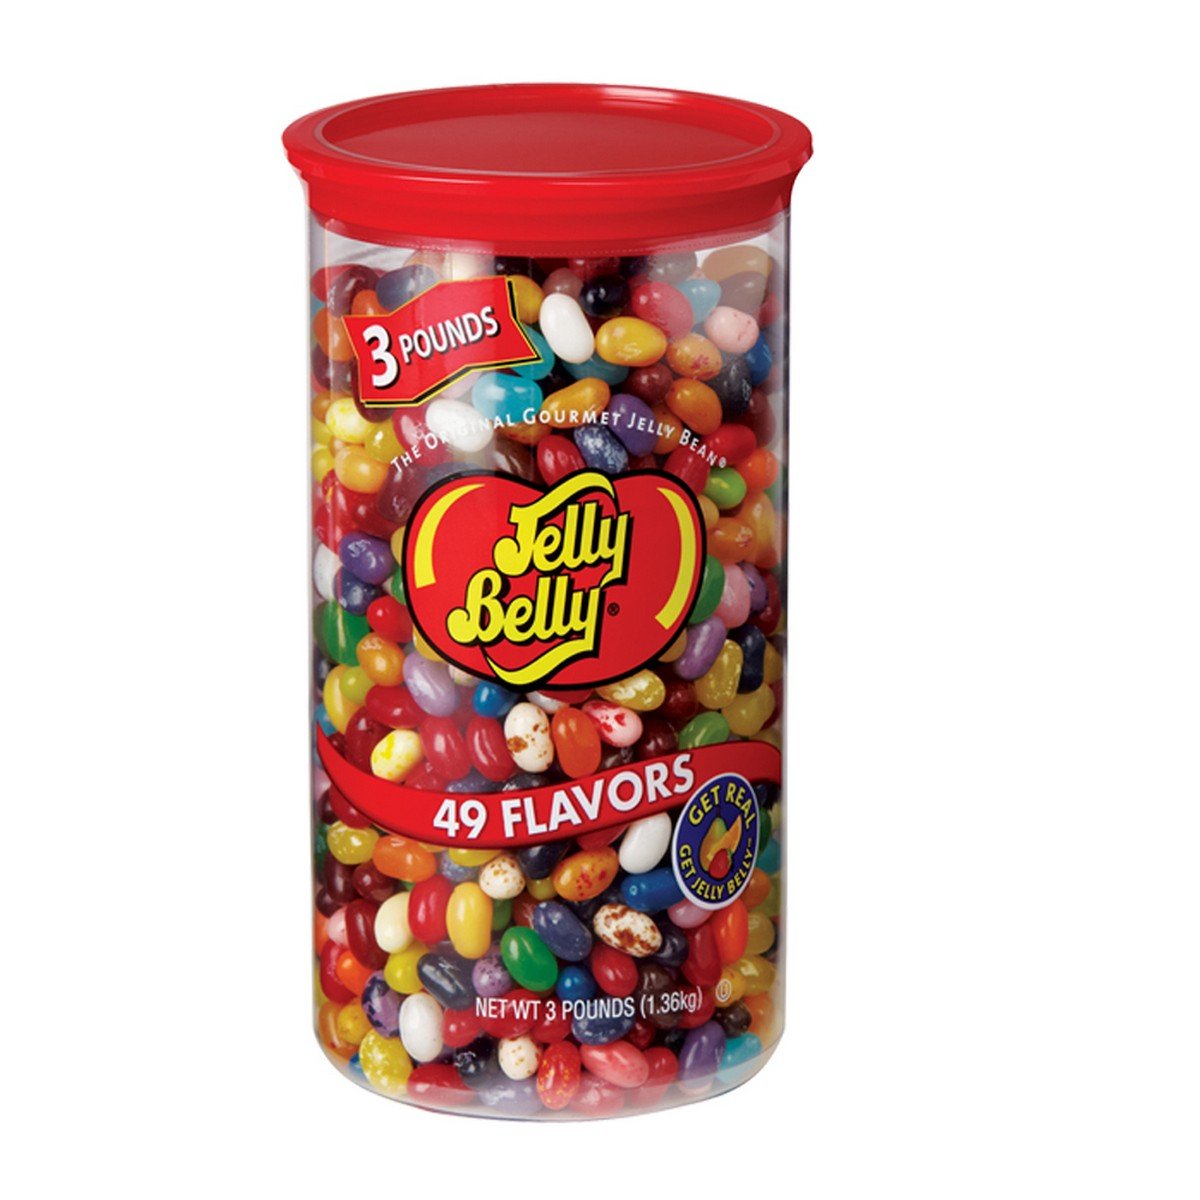 Orion jelly. Джелли Белли. Джелли Белли вкусы. Jelly belly 49 flavors. Джелли Бин вкусы.